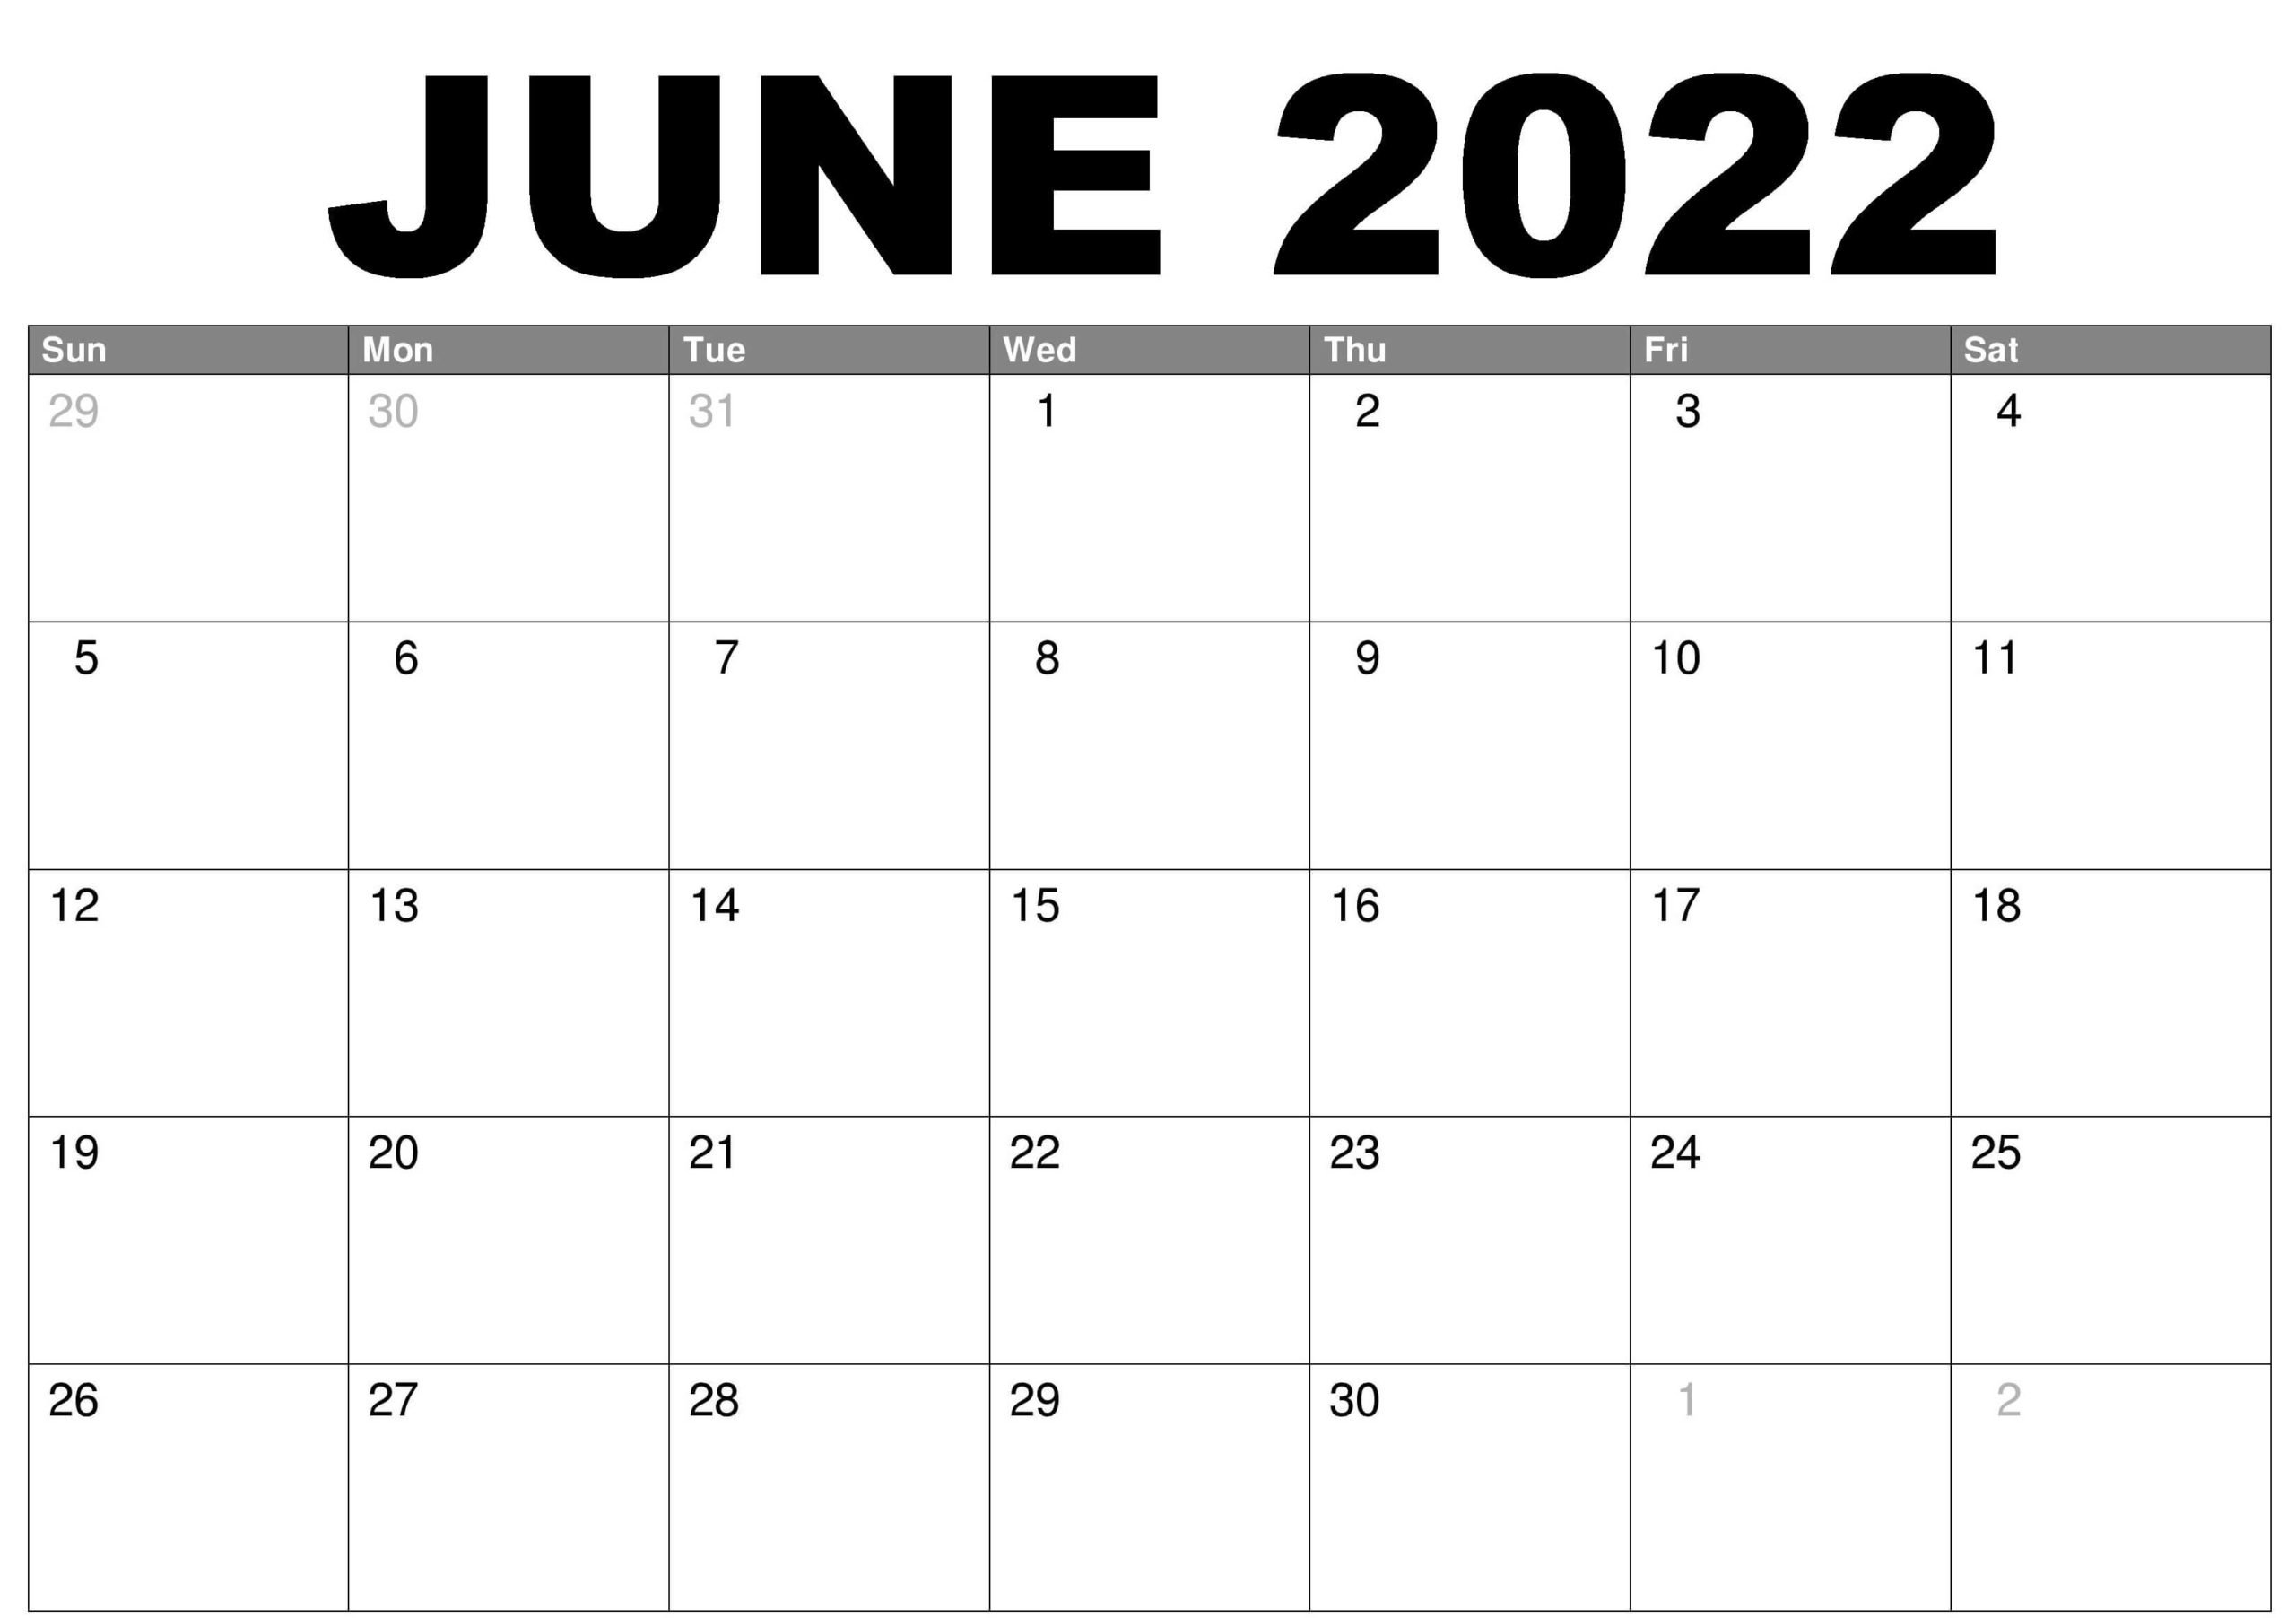 June calendar 2022 template